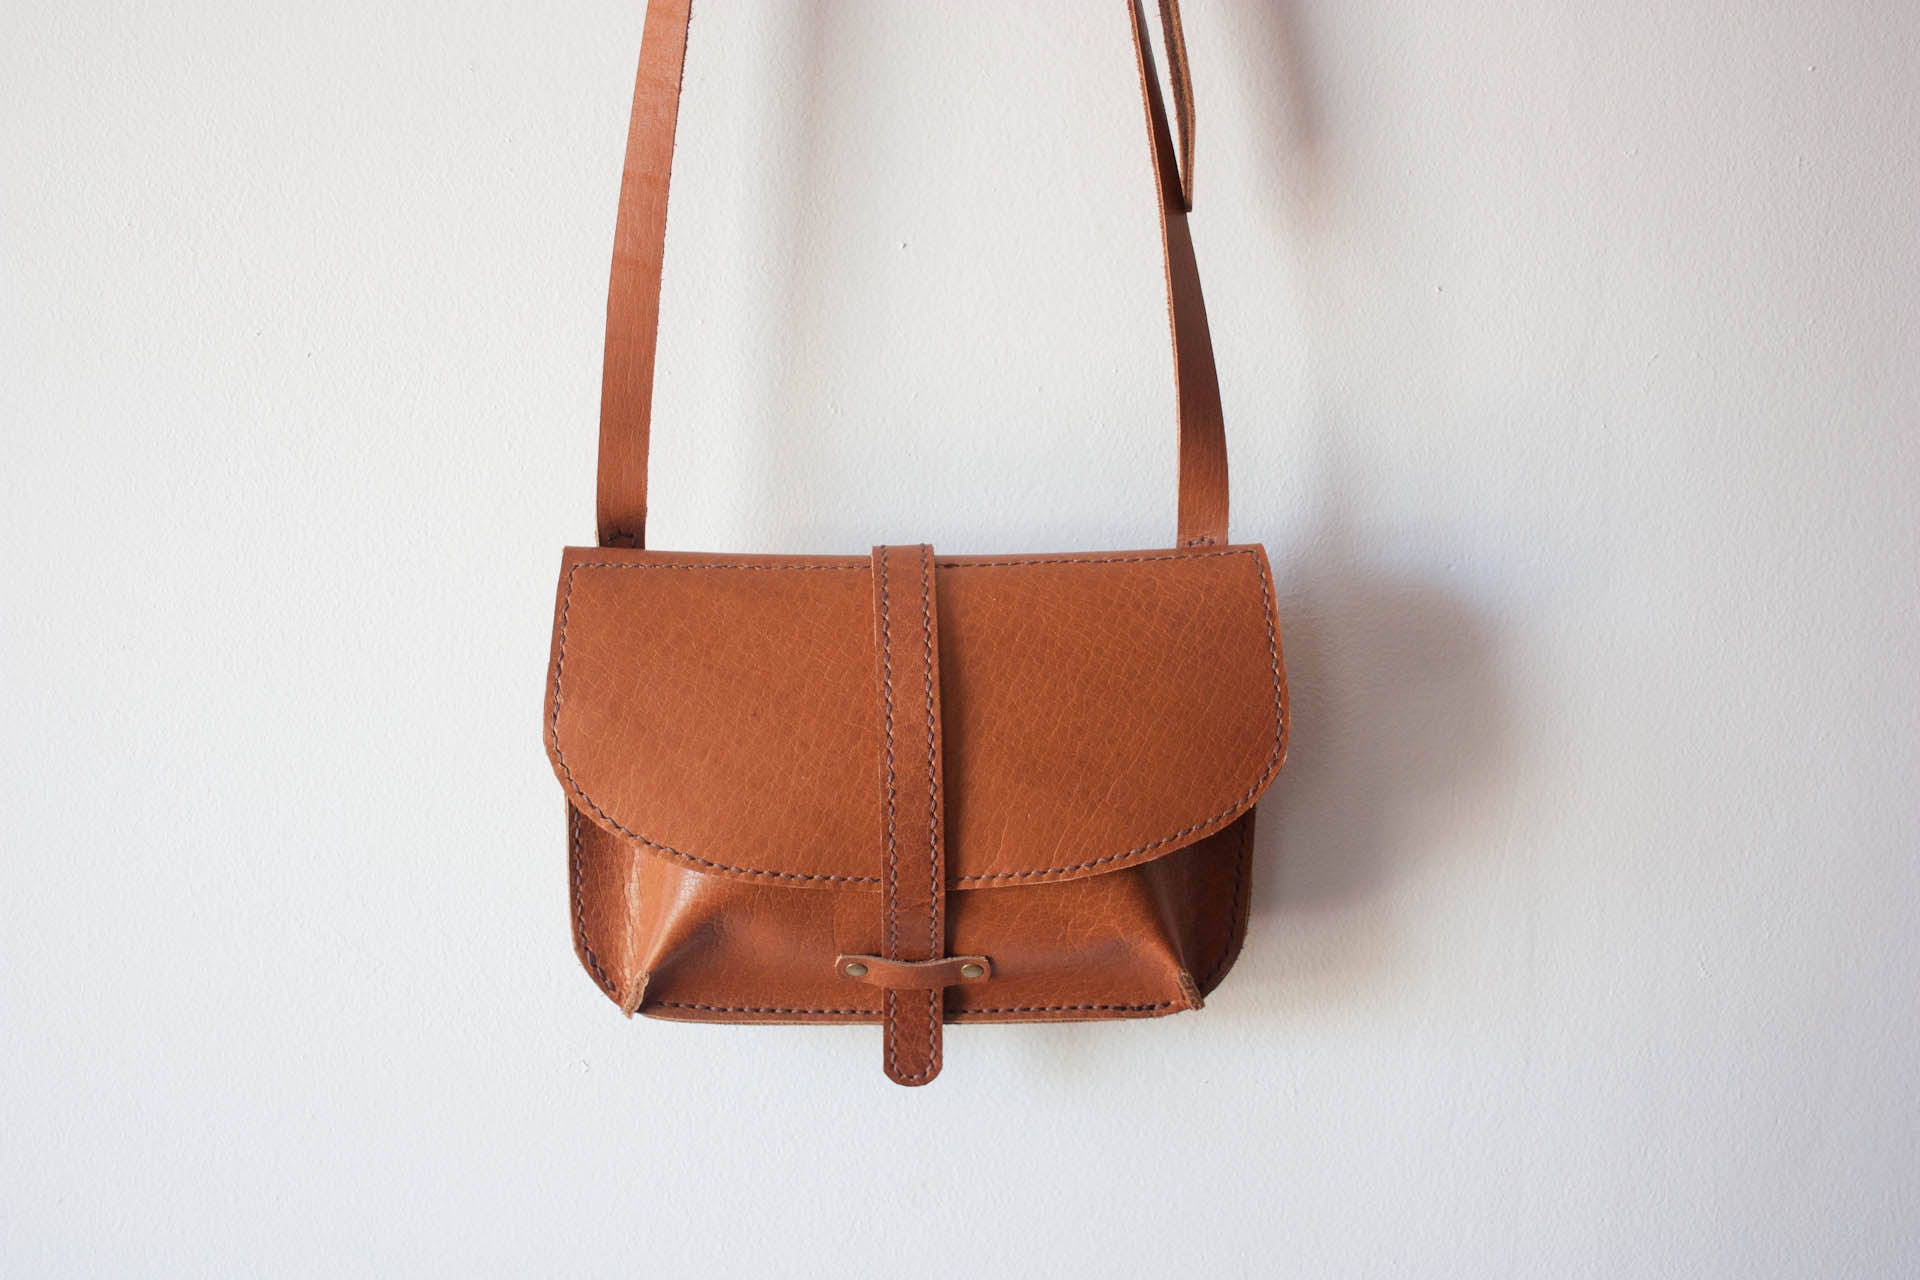 Medium Saddle Bag in Camel // Leather Crossbody Bag / Leather